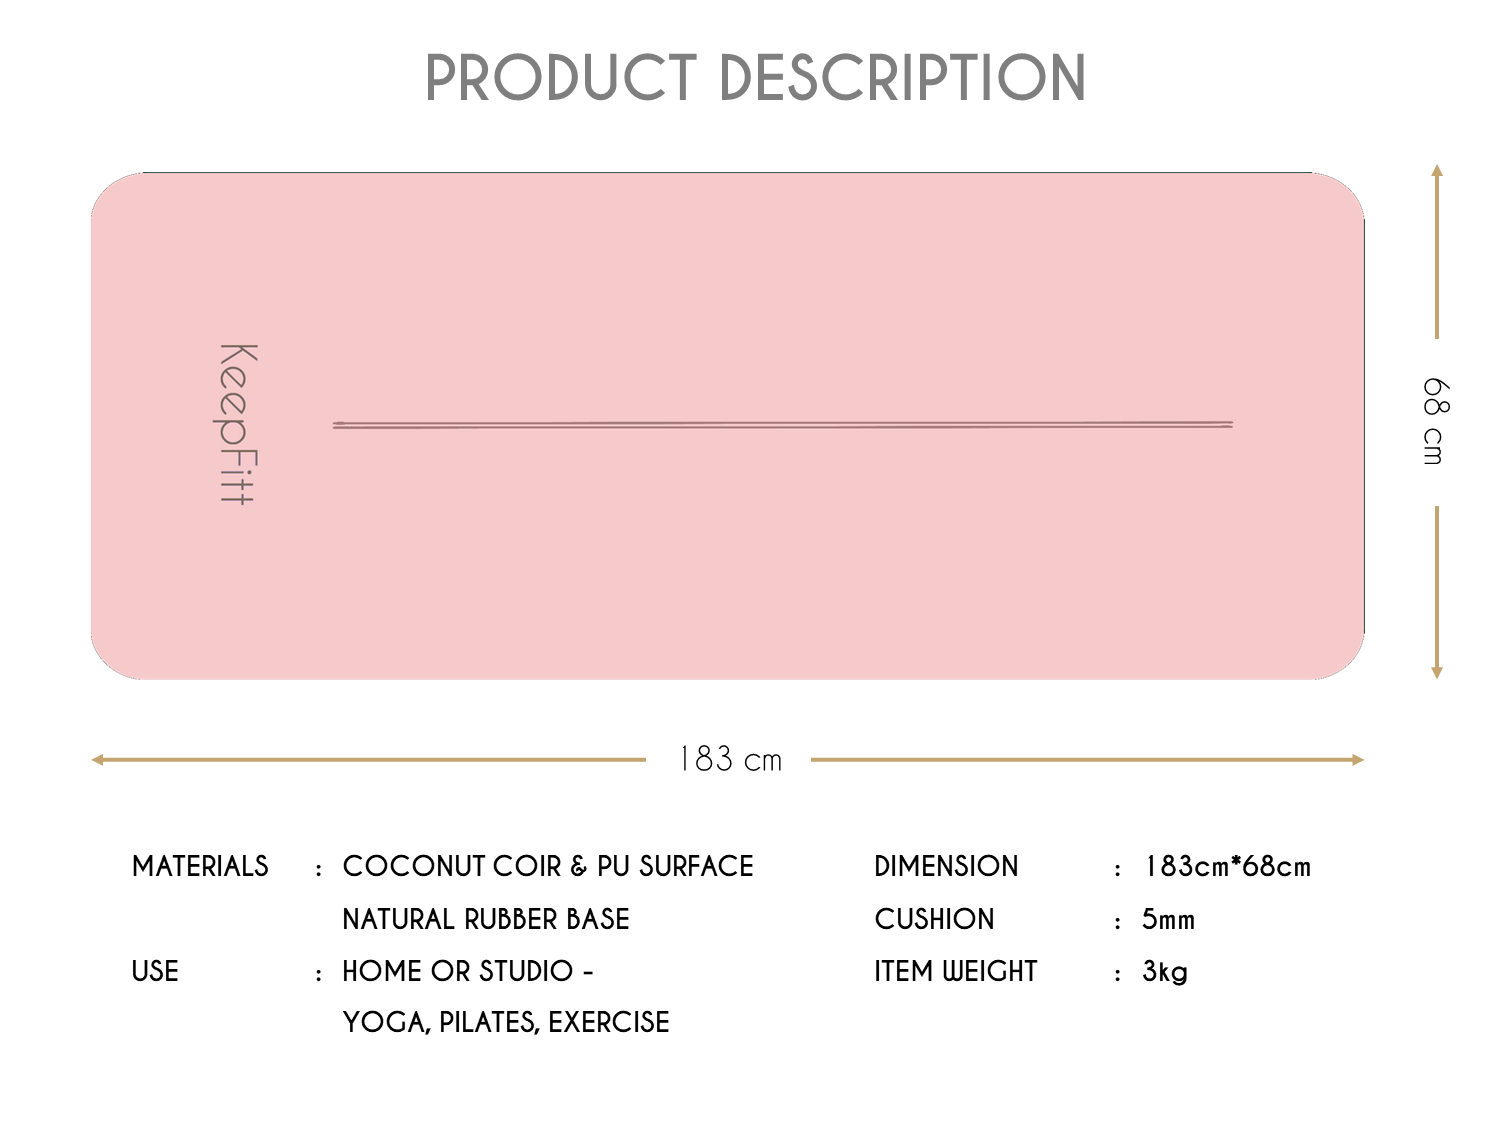 Product Description (Cherry Blossom)